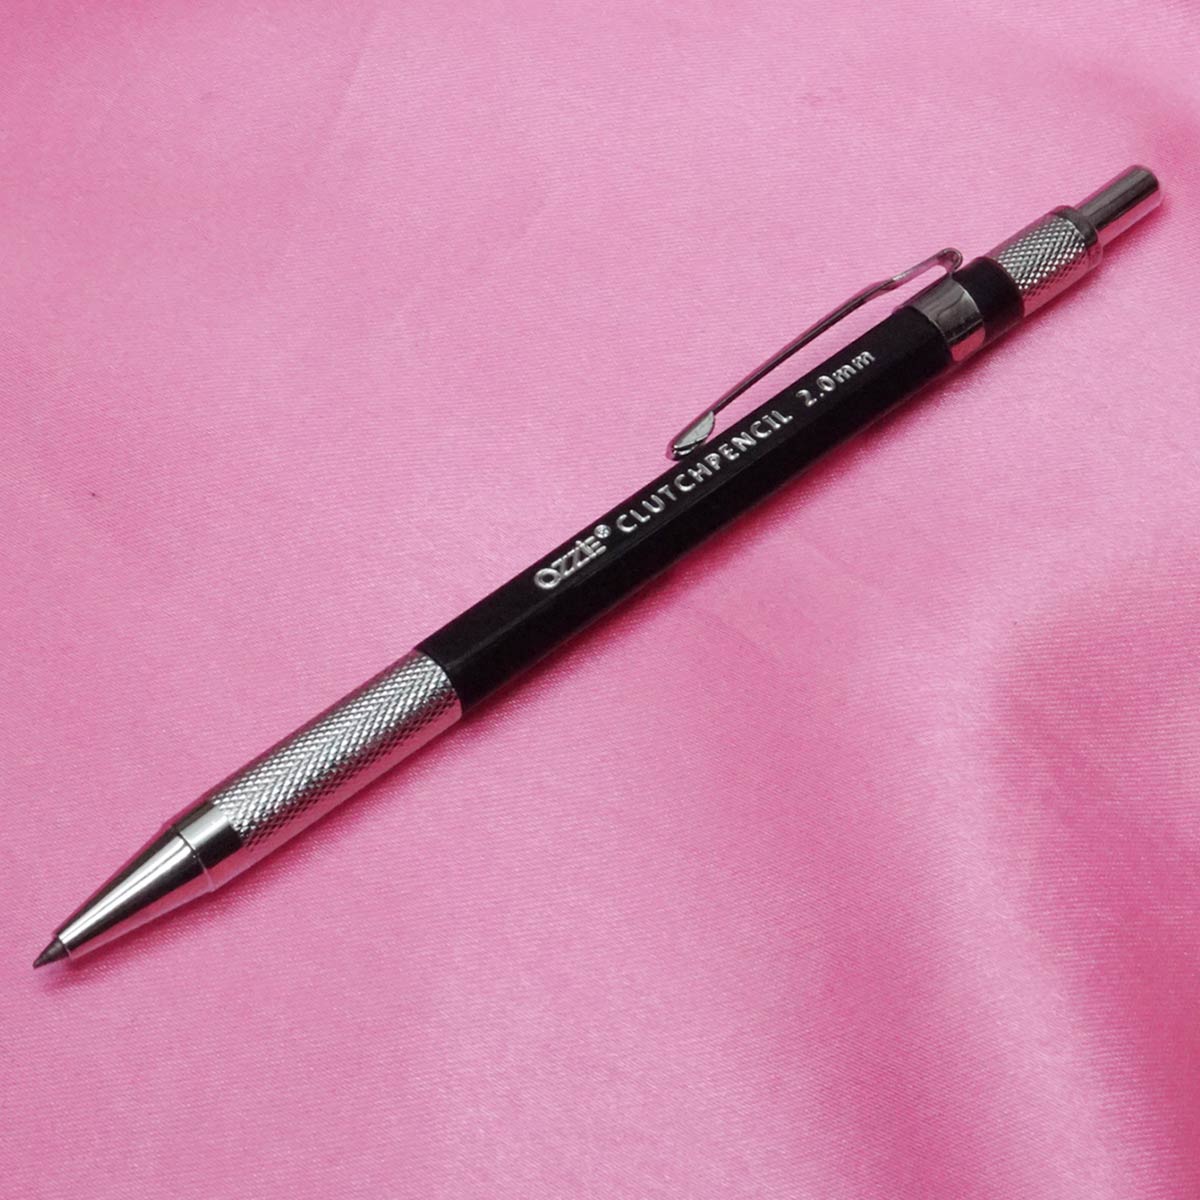 Ozzie Clutch Pencil 2.0mm Black Color Body With Silver Trim Design Led Pencil SKU 21504